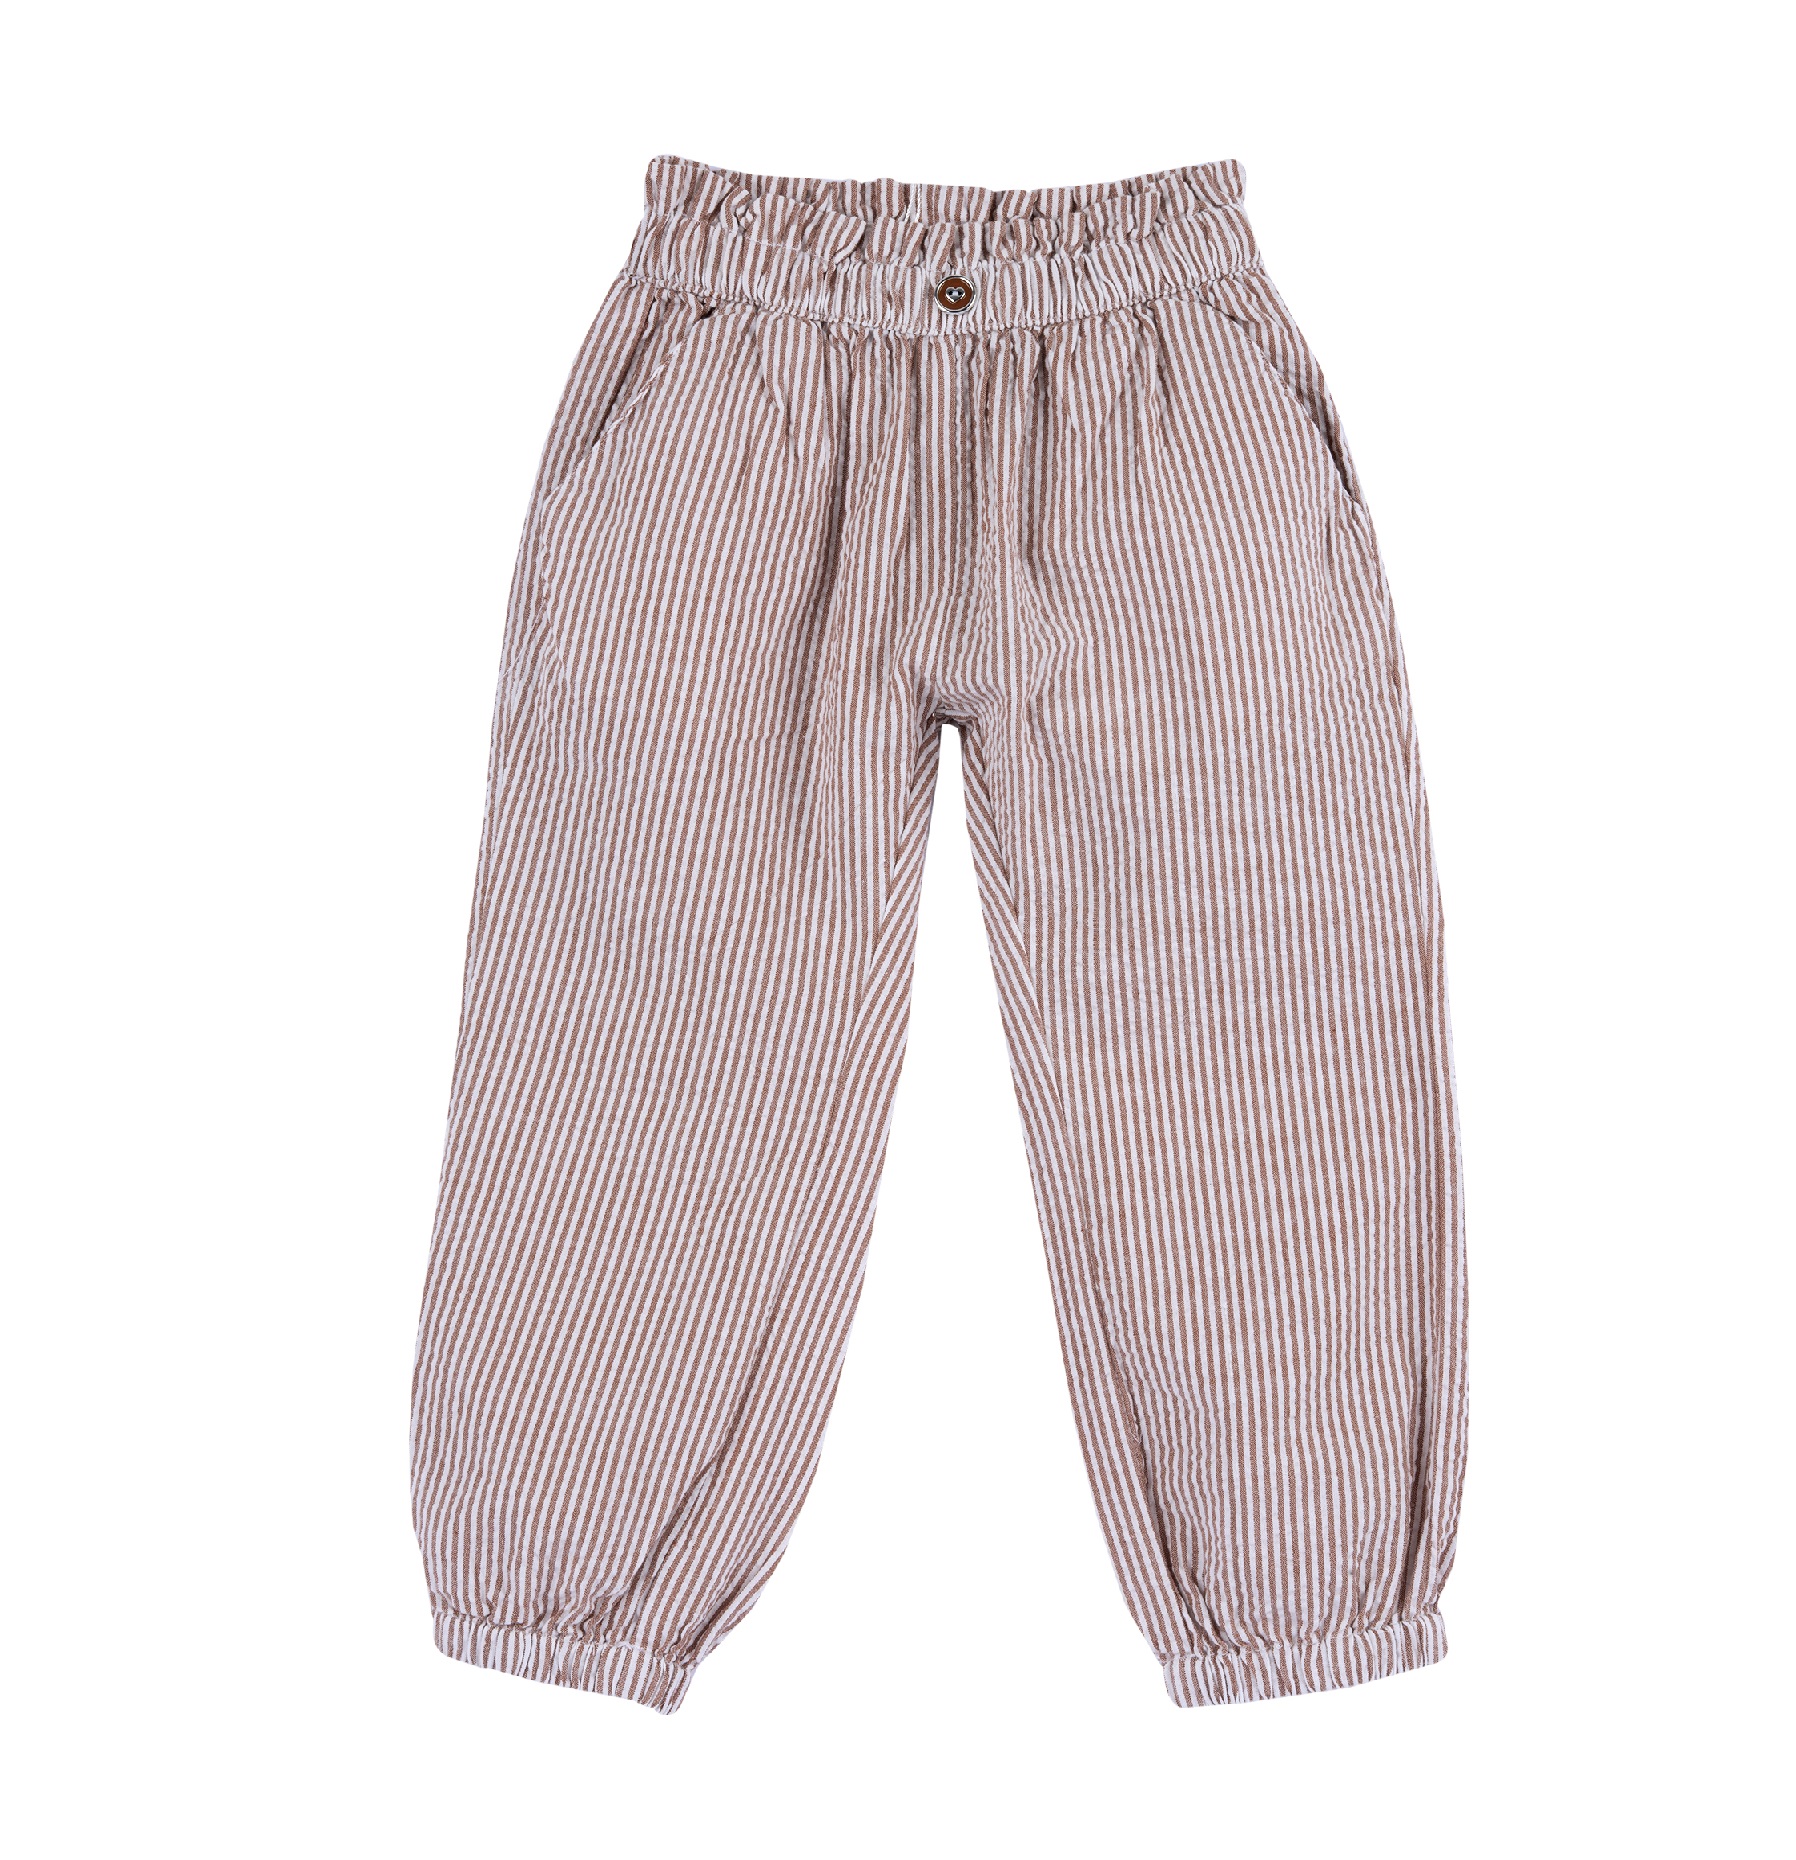 Pantaloni Copii Chicco, Maro, 08810-64mc